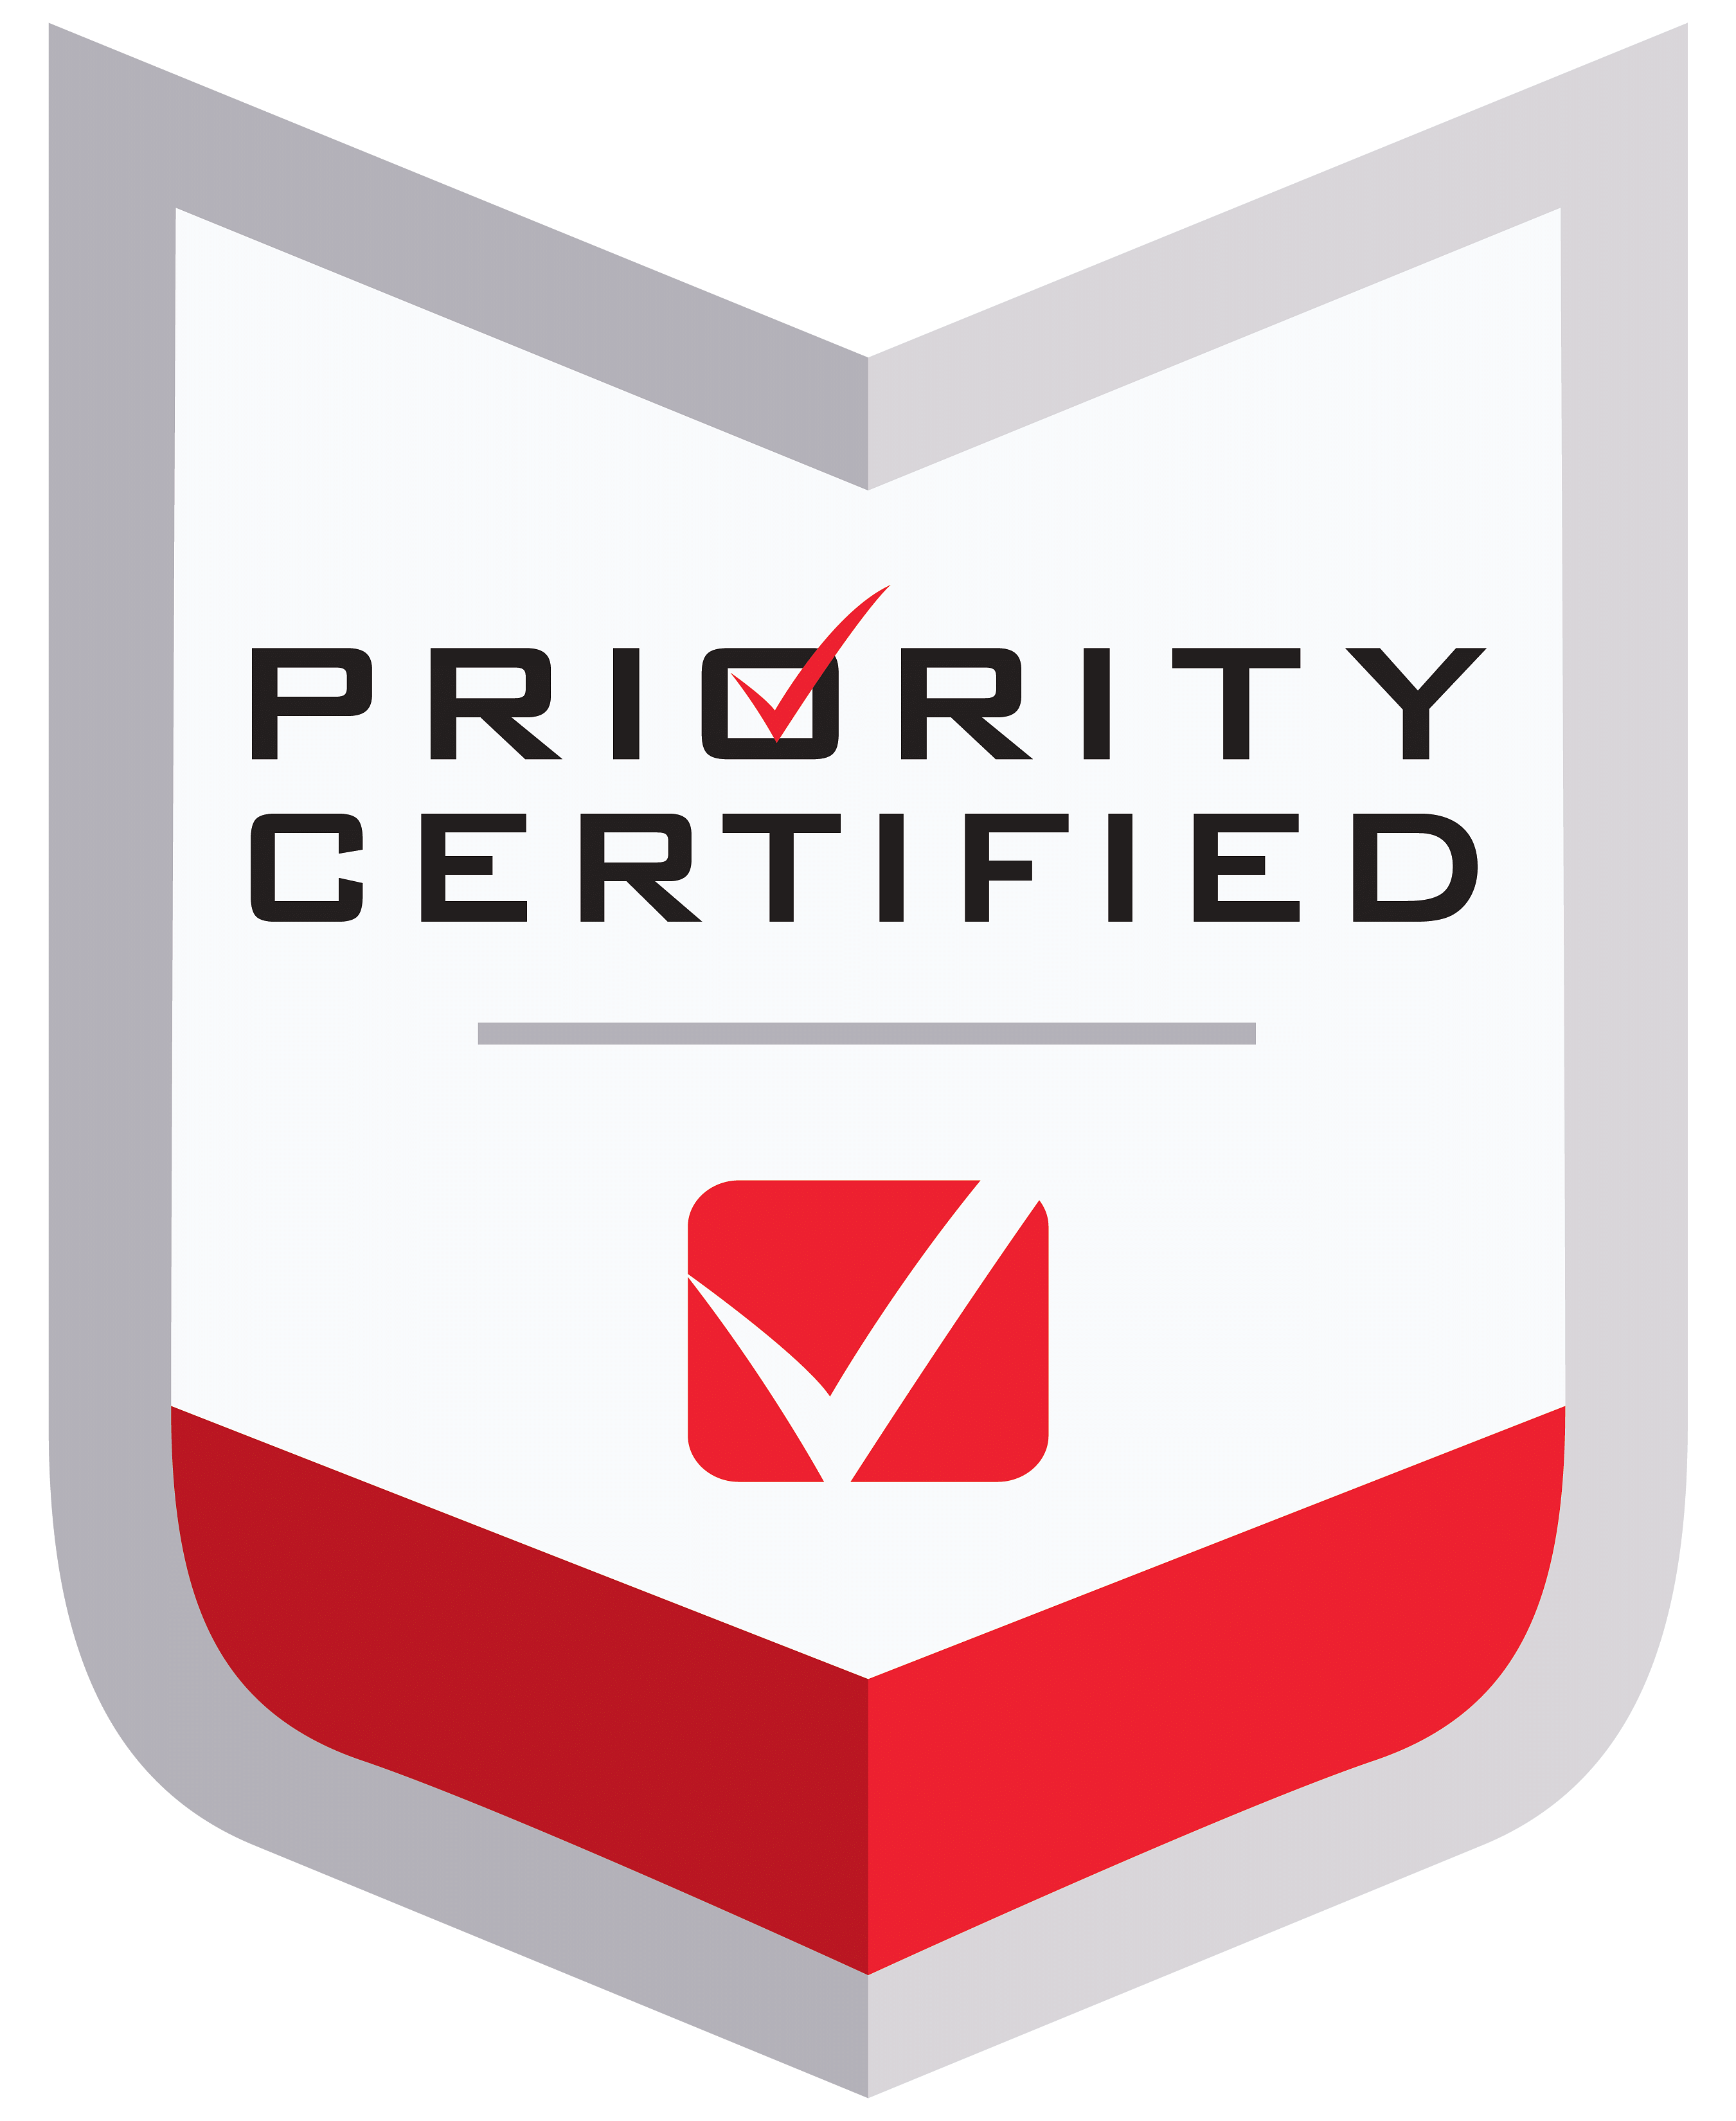 Priority Certified Badge logo